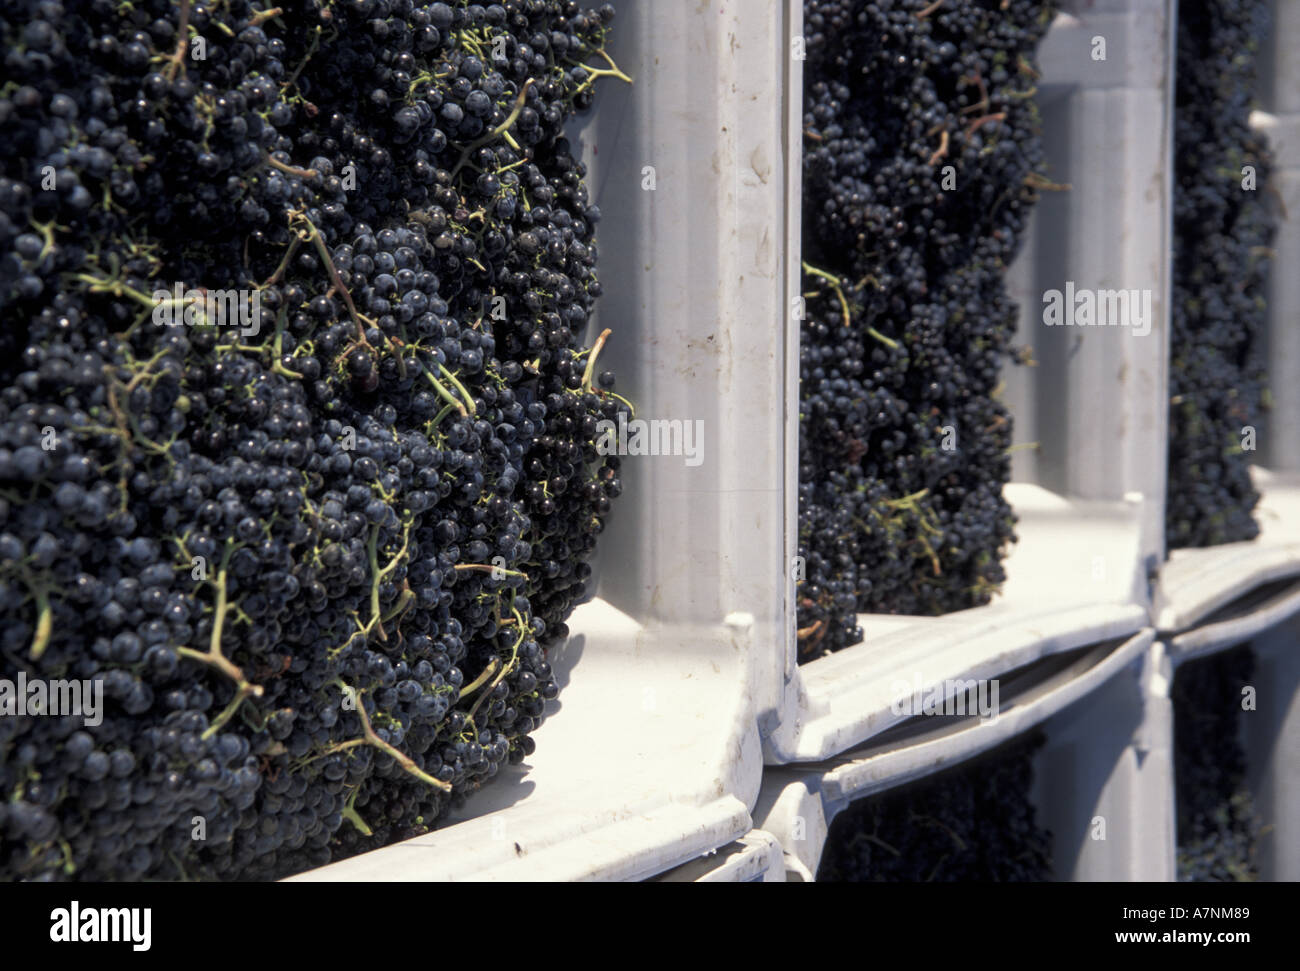 North America, USA, Washington, Lowden, L'Ecole No. 41 Winery. bins of grapes await the crush. Stock Photo